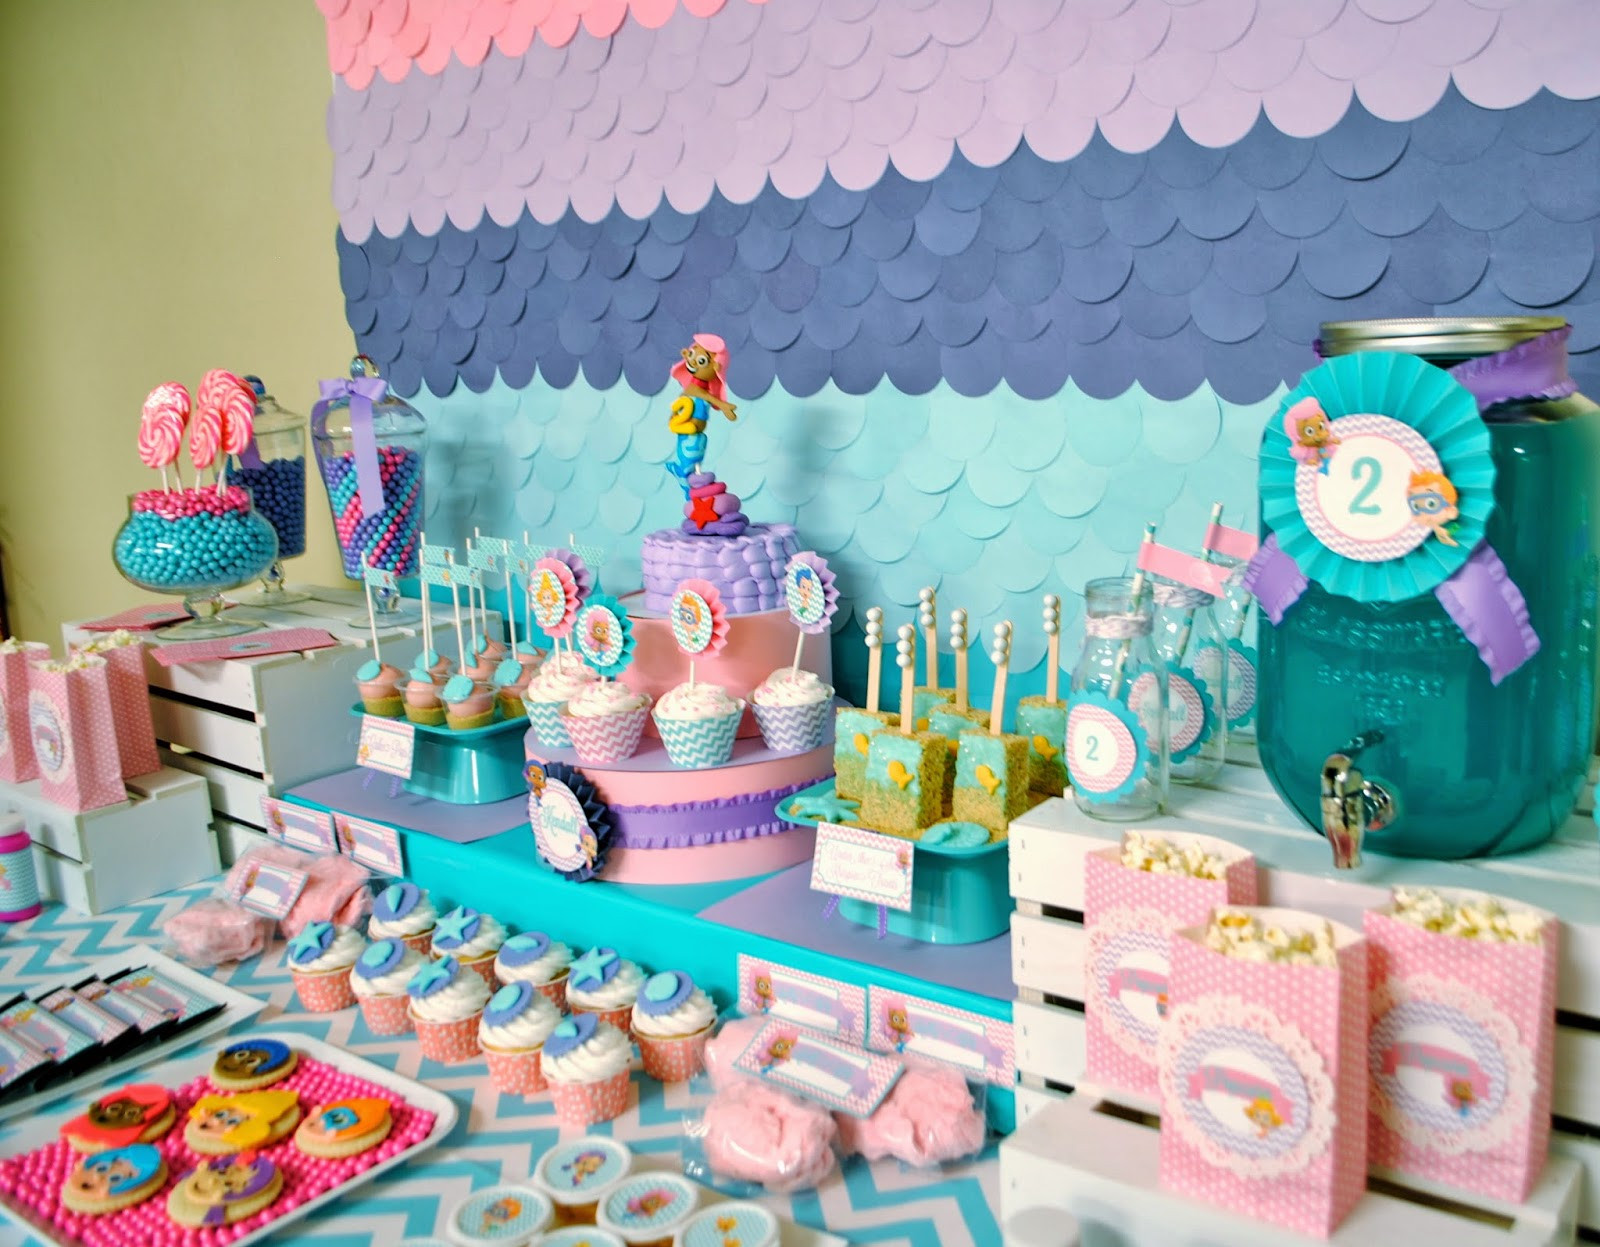 Bubble Guppies Birthday Decorations
 Karo s Fun Land Bubble Guppies 2nd Birthday Party